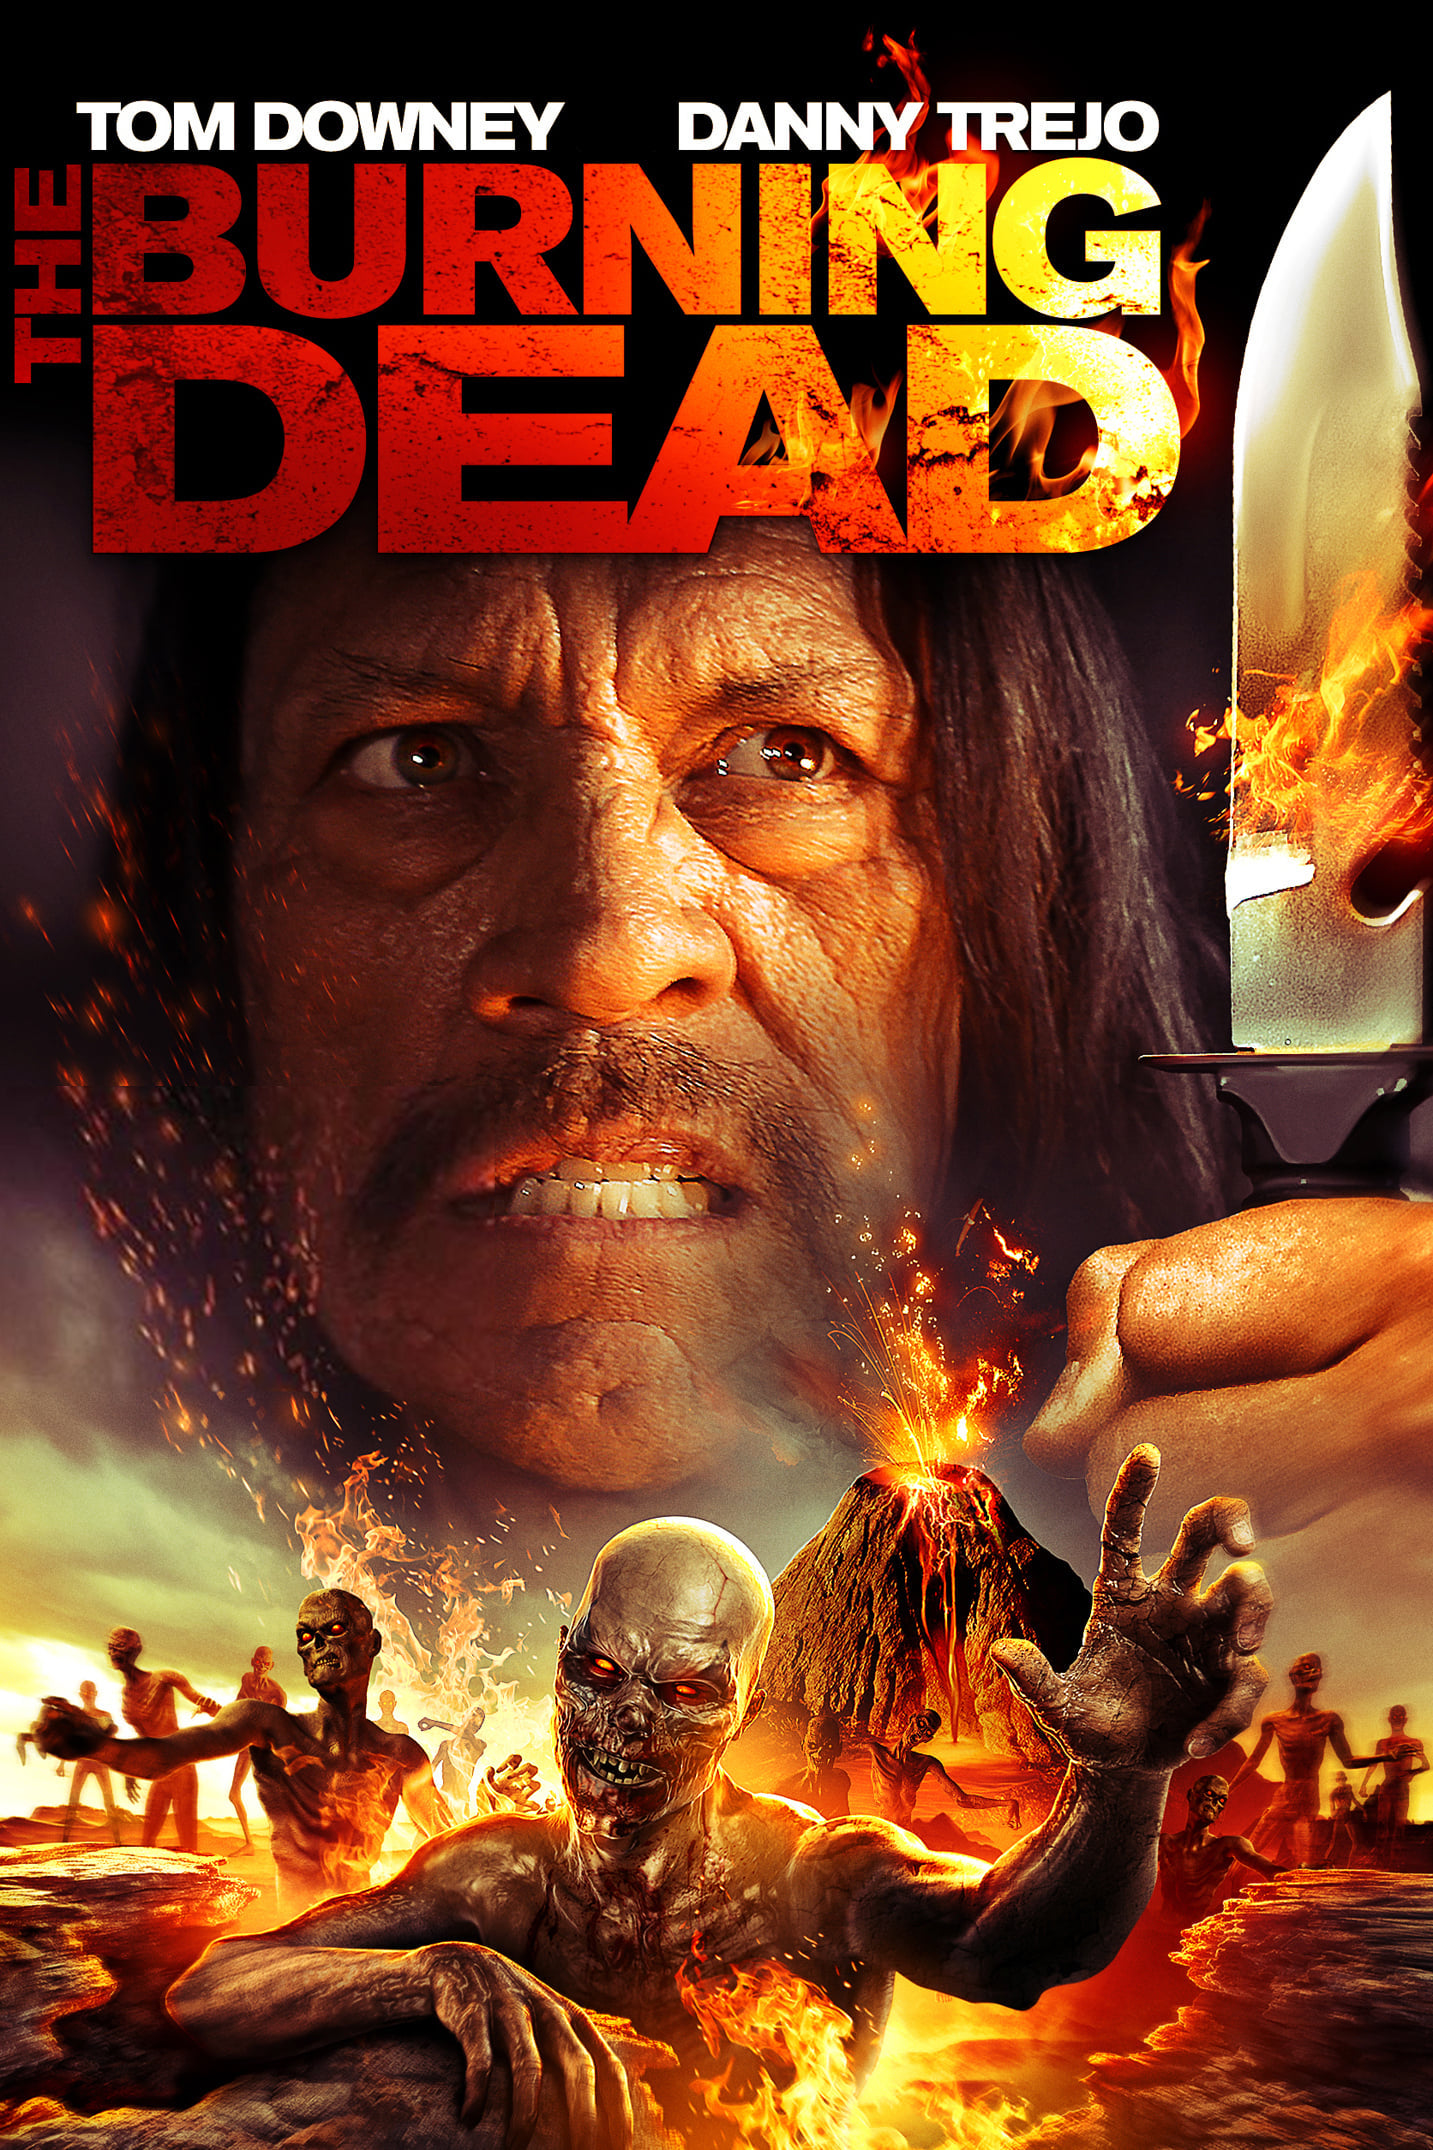 The Burning Dead [HD] (2015)